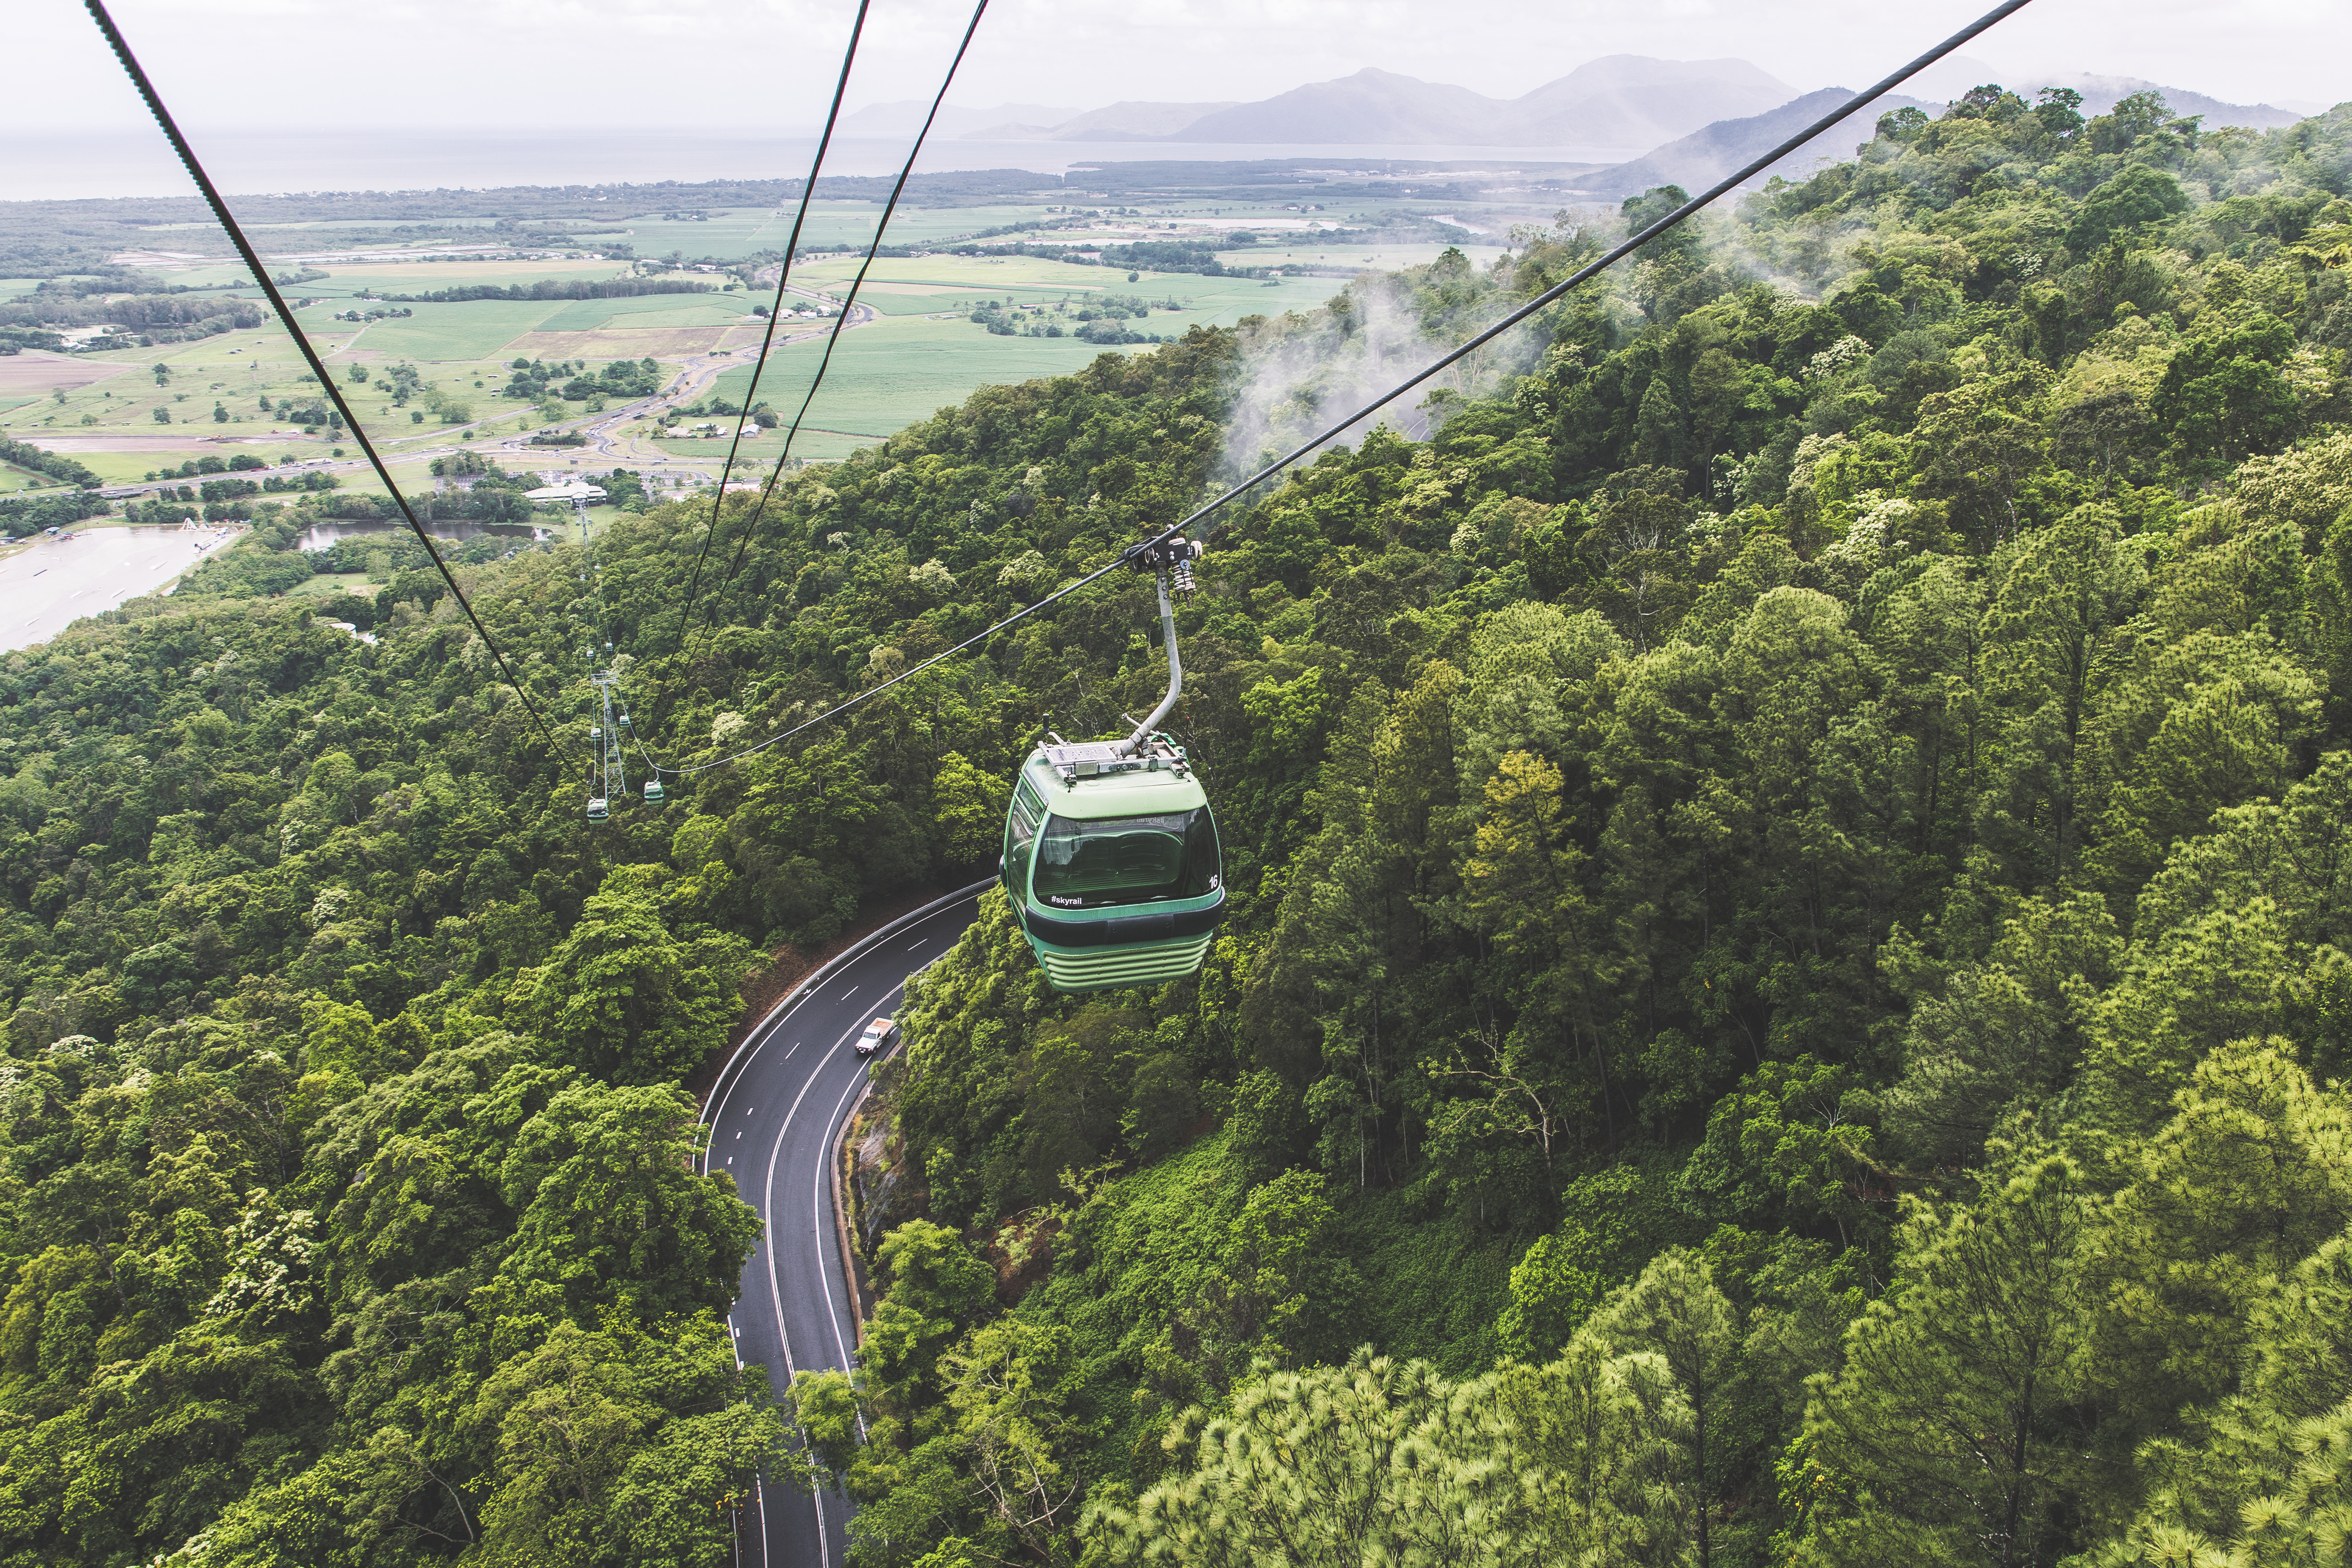 Scenic Skyrail gondola over Kuranda rainforest.